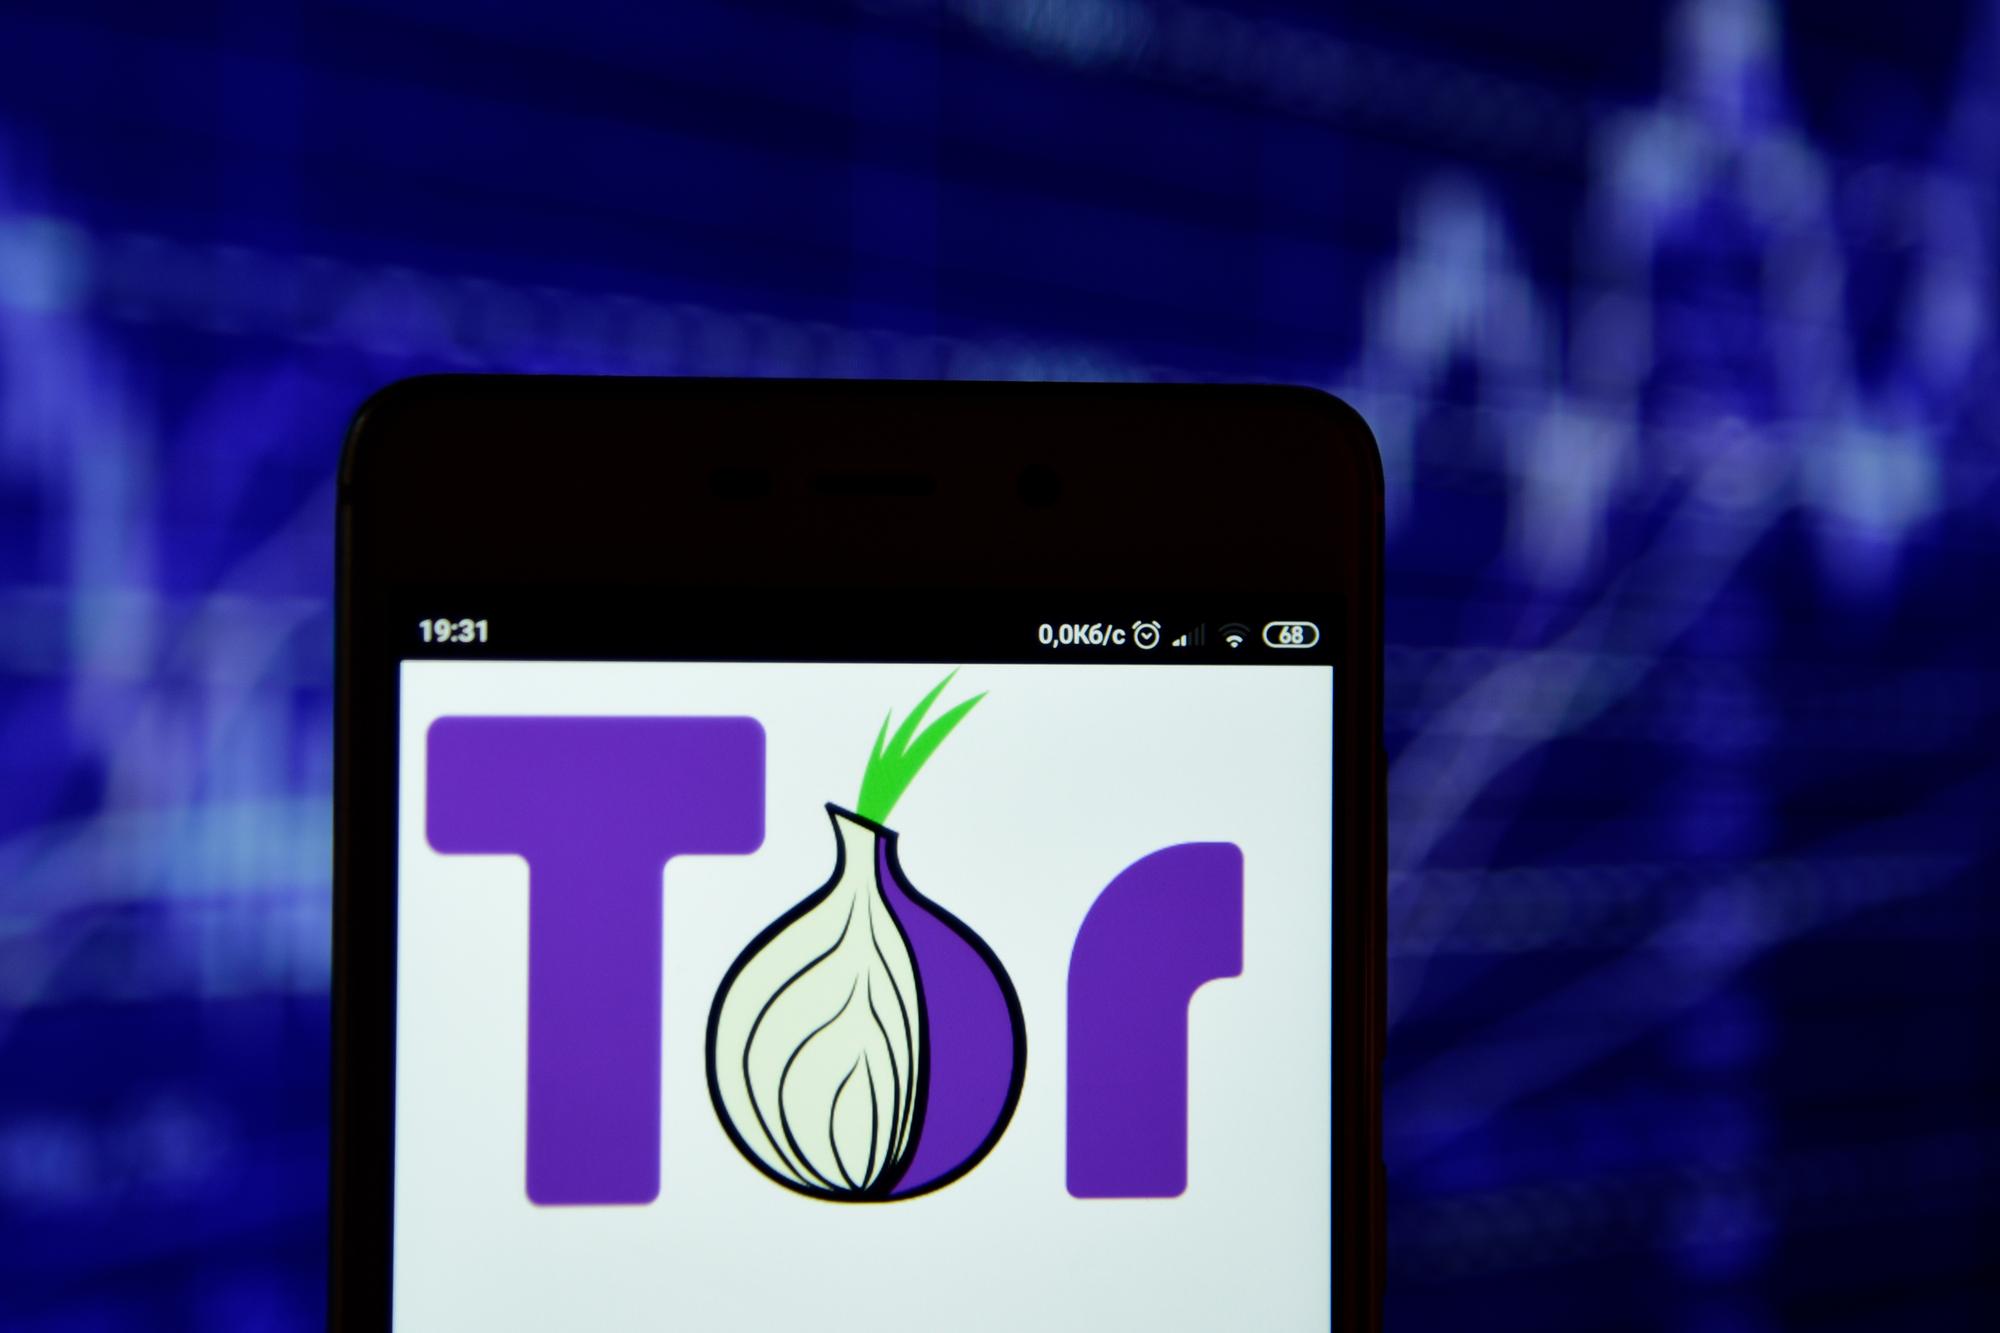 KAX17: De-Anonymisierungs-Angriffe gegen Tor-Nutzer